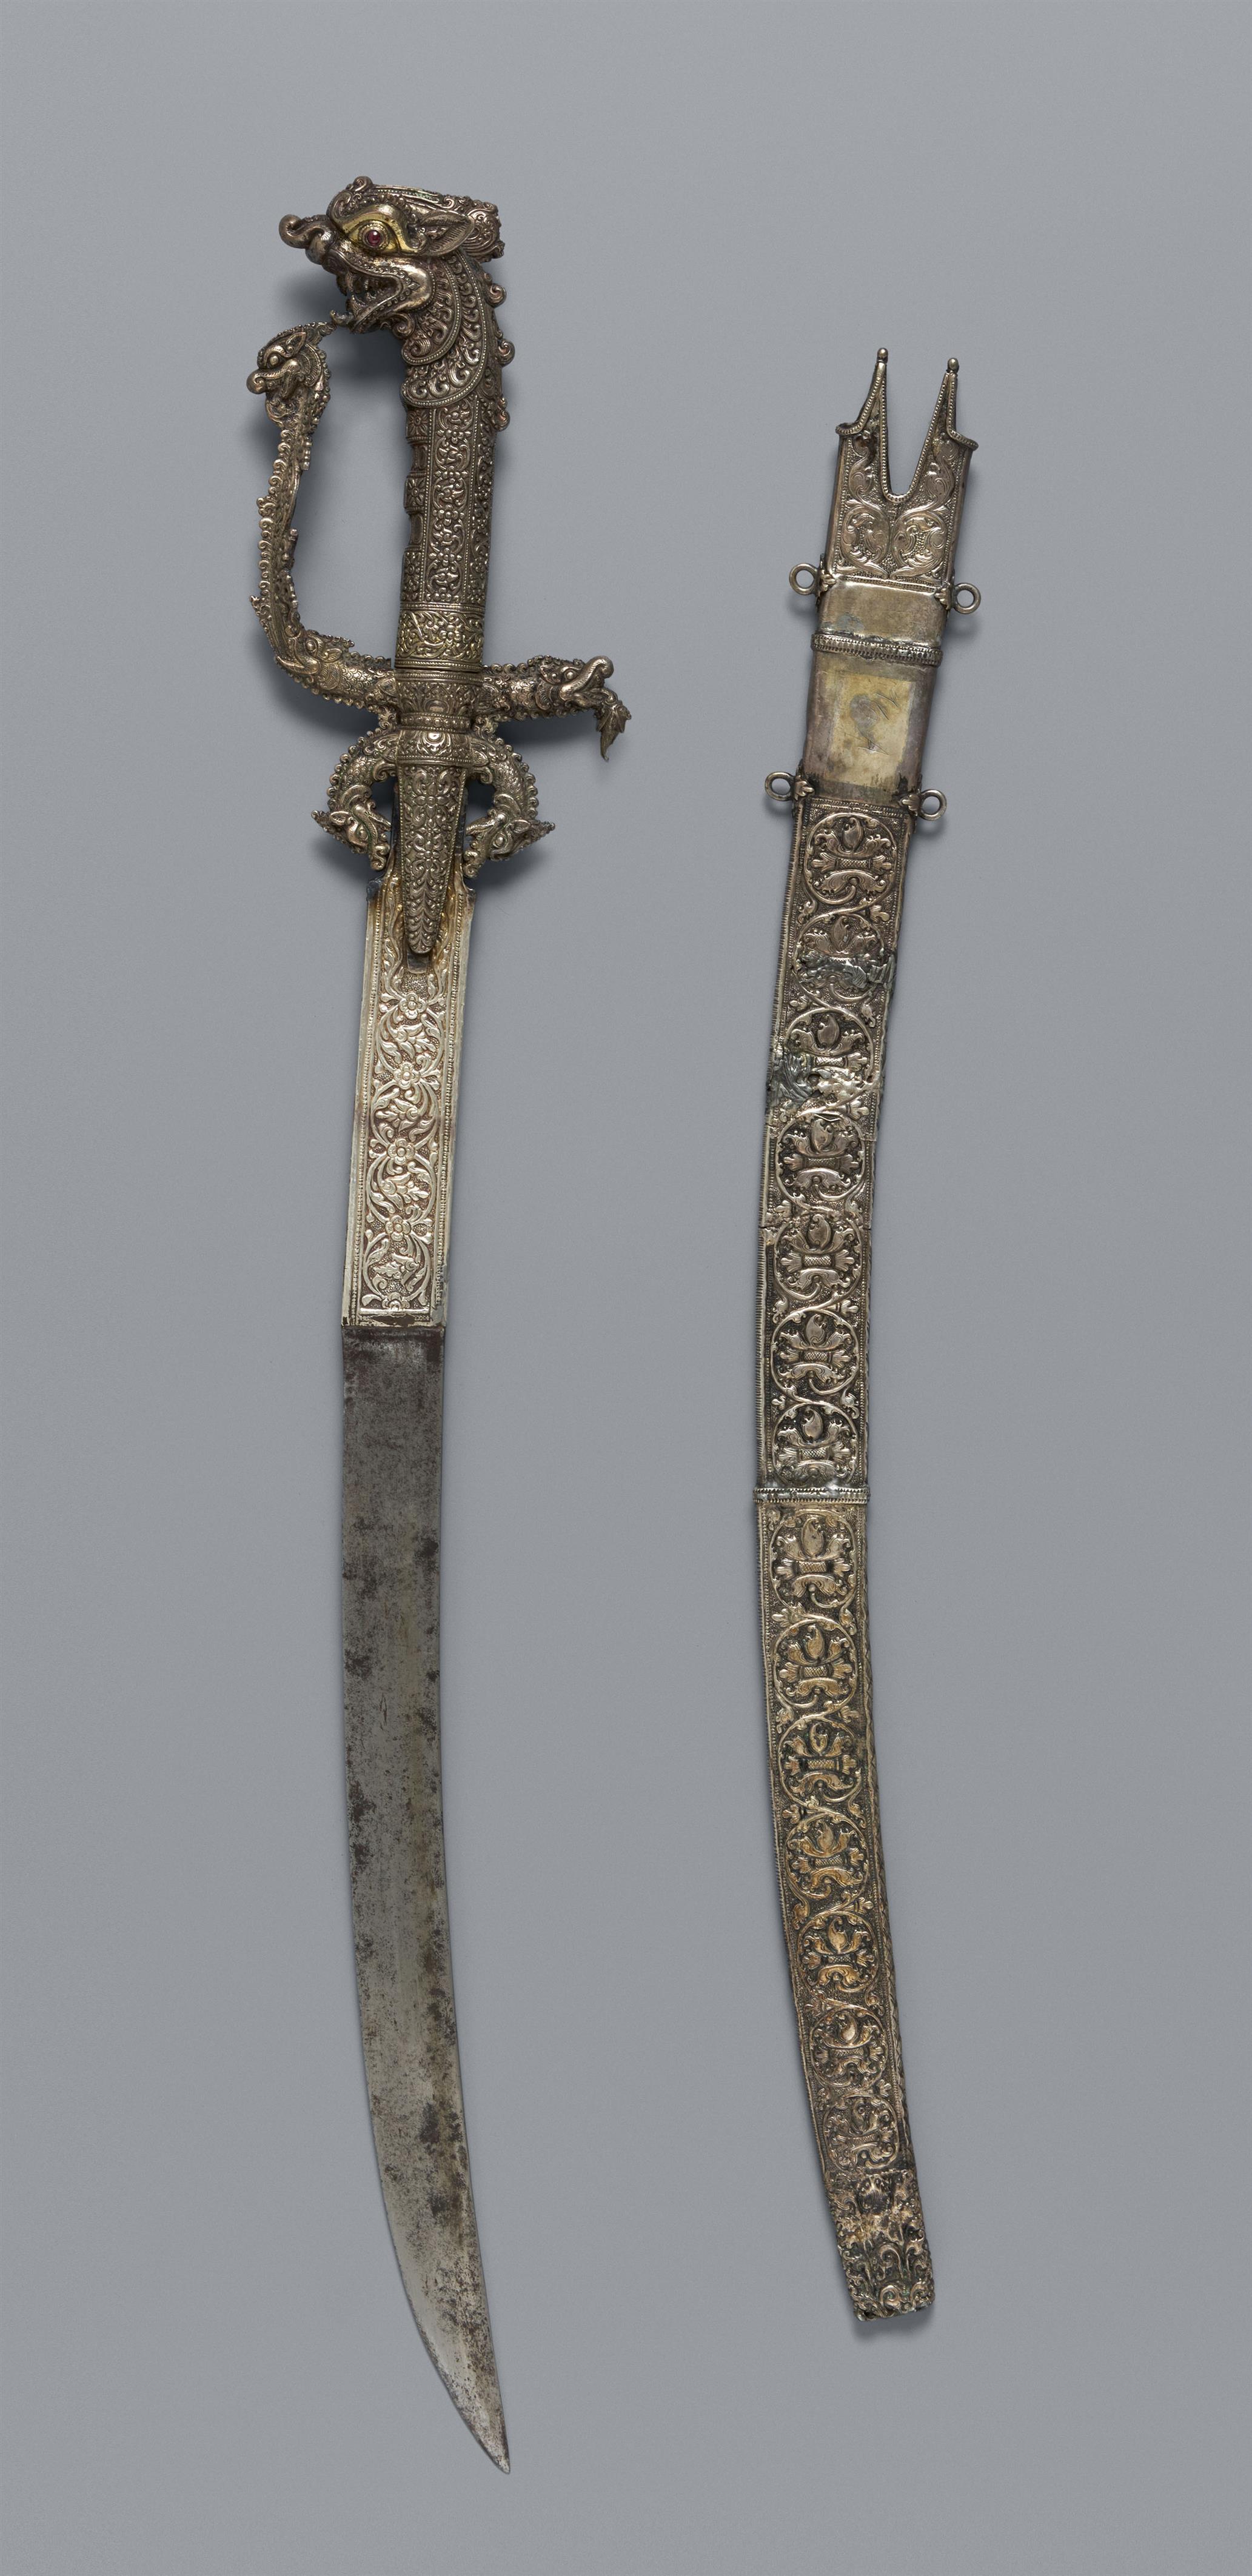 A Kandyan silver sword and scabbard (kasthane). Sri Lanka. Kandy period, 19th century - image-1